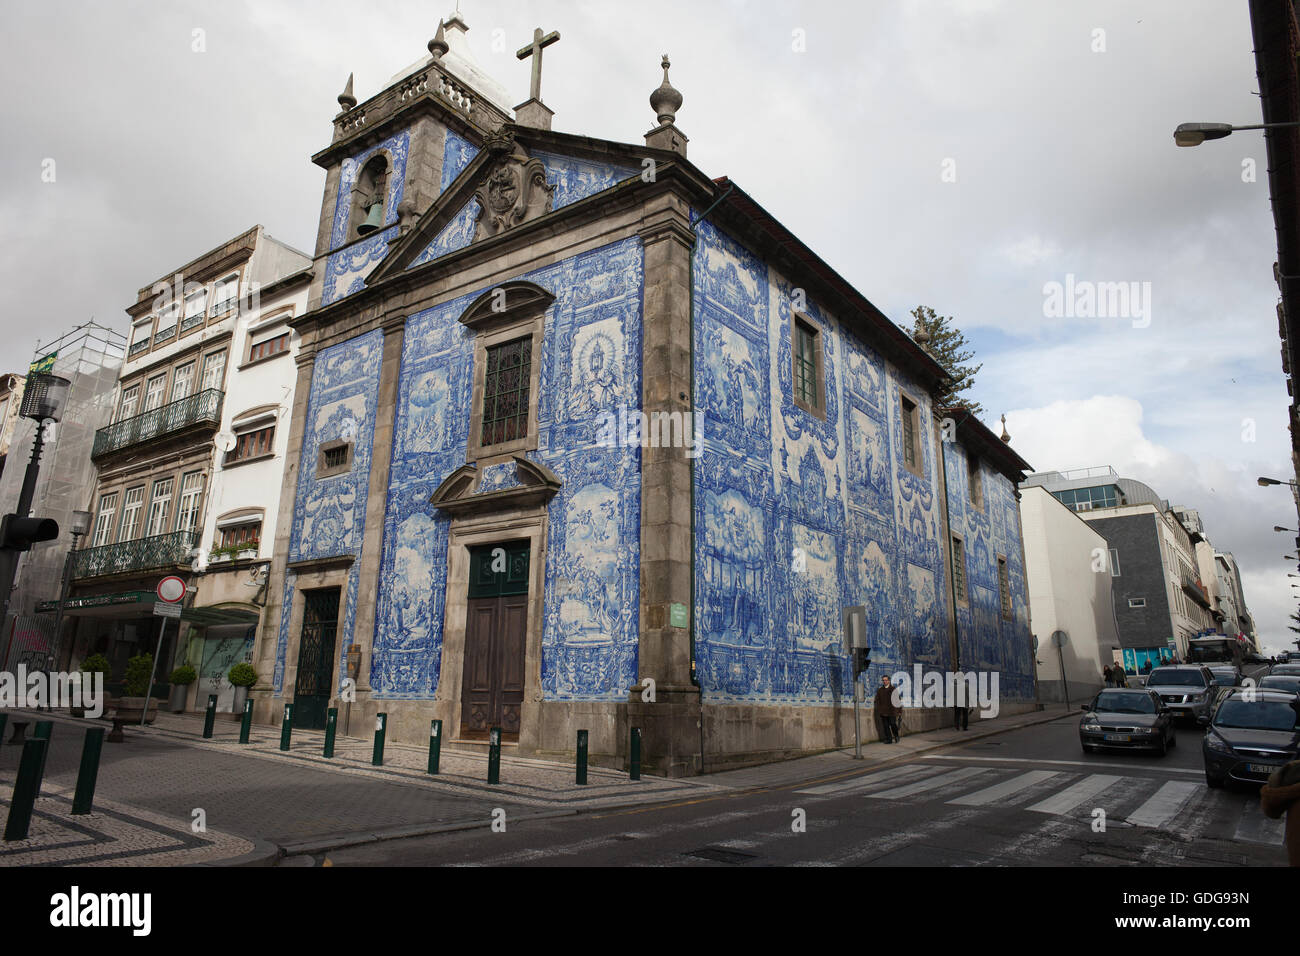 Capela das Almas Church in Porto, Portugal, covered with blue and white azulejo tiles Stock Photo